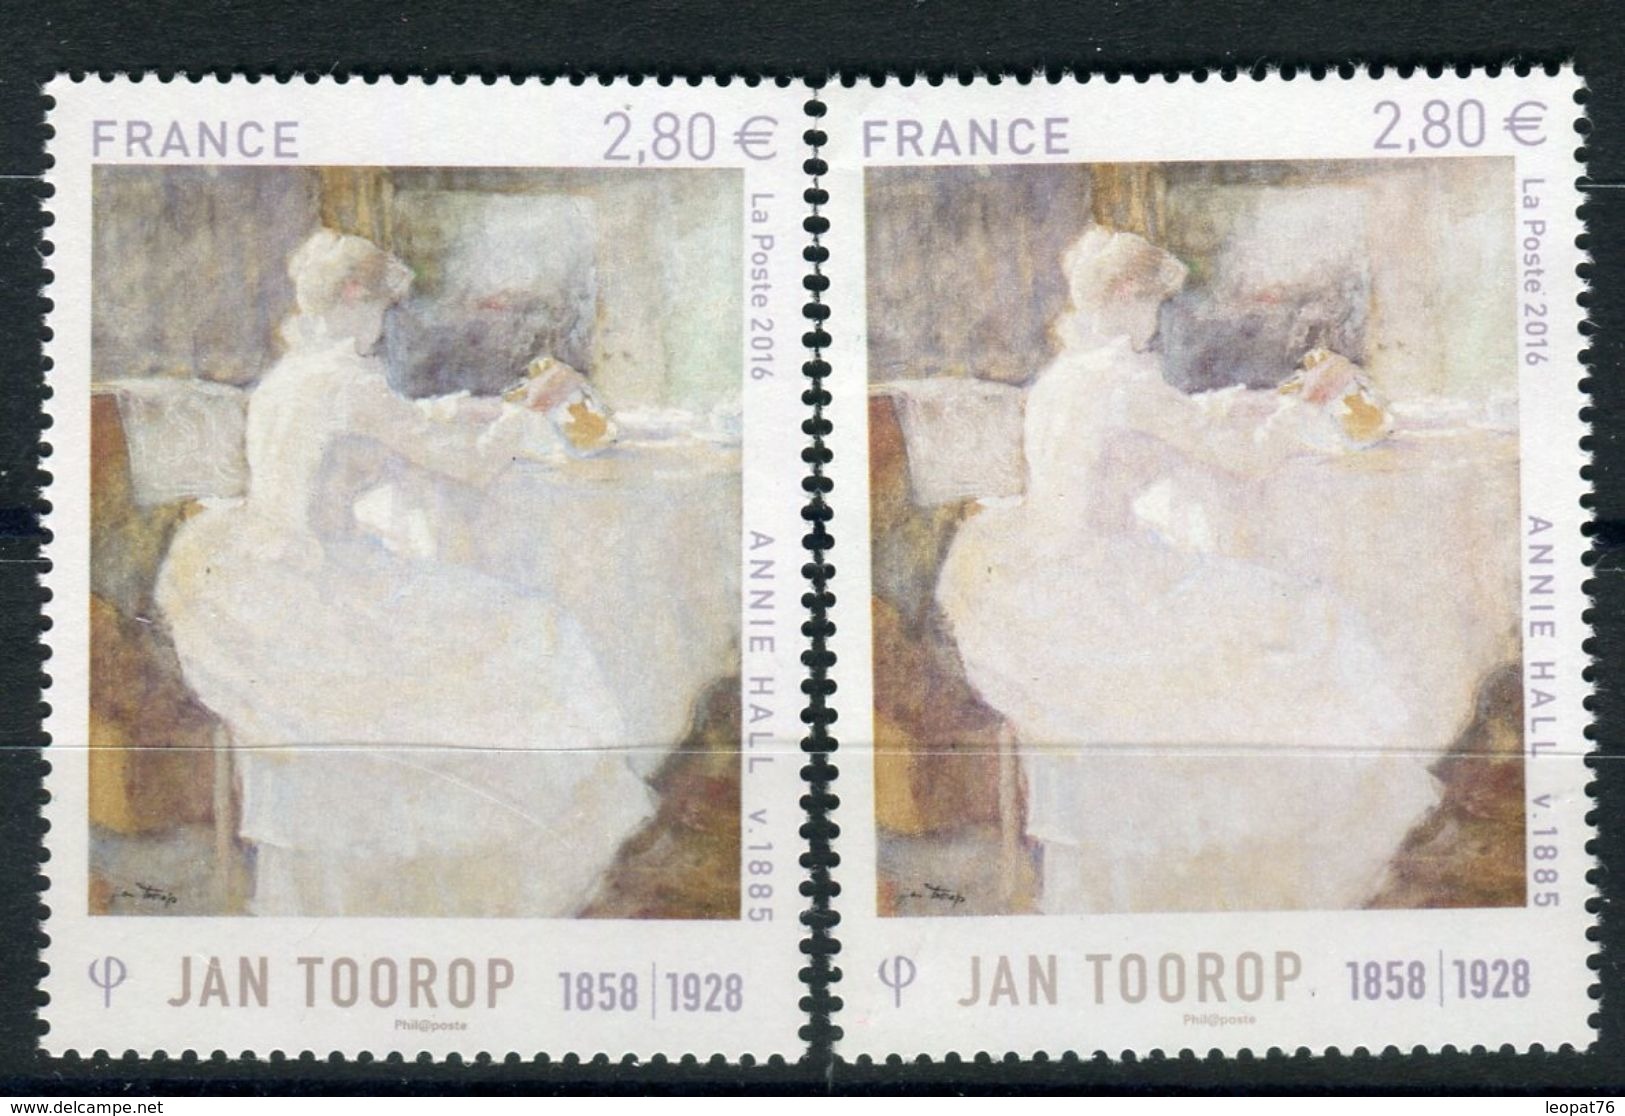 France - Variété - N°Yvert 5033,  2 Nuances De Robe , Neufs Luxe  - Ref V163 - Unused Stamps